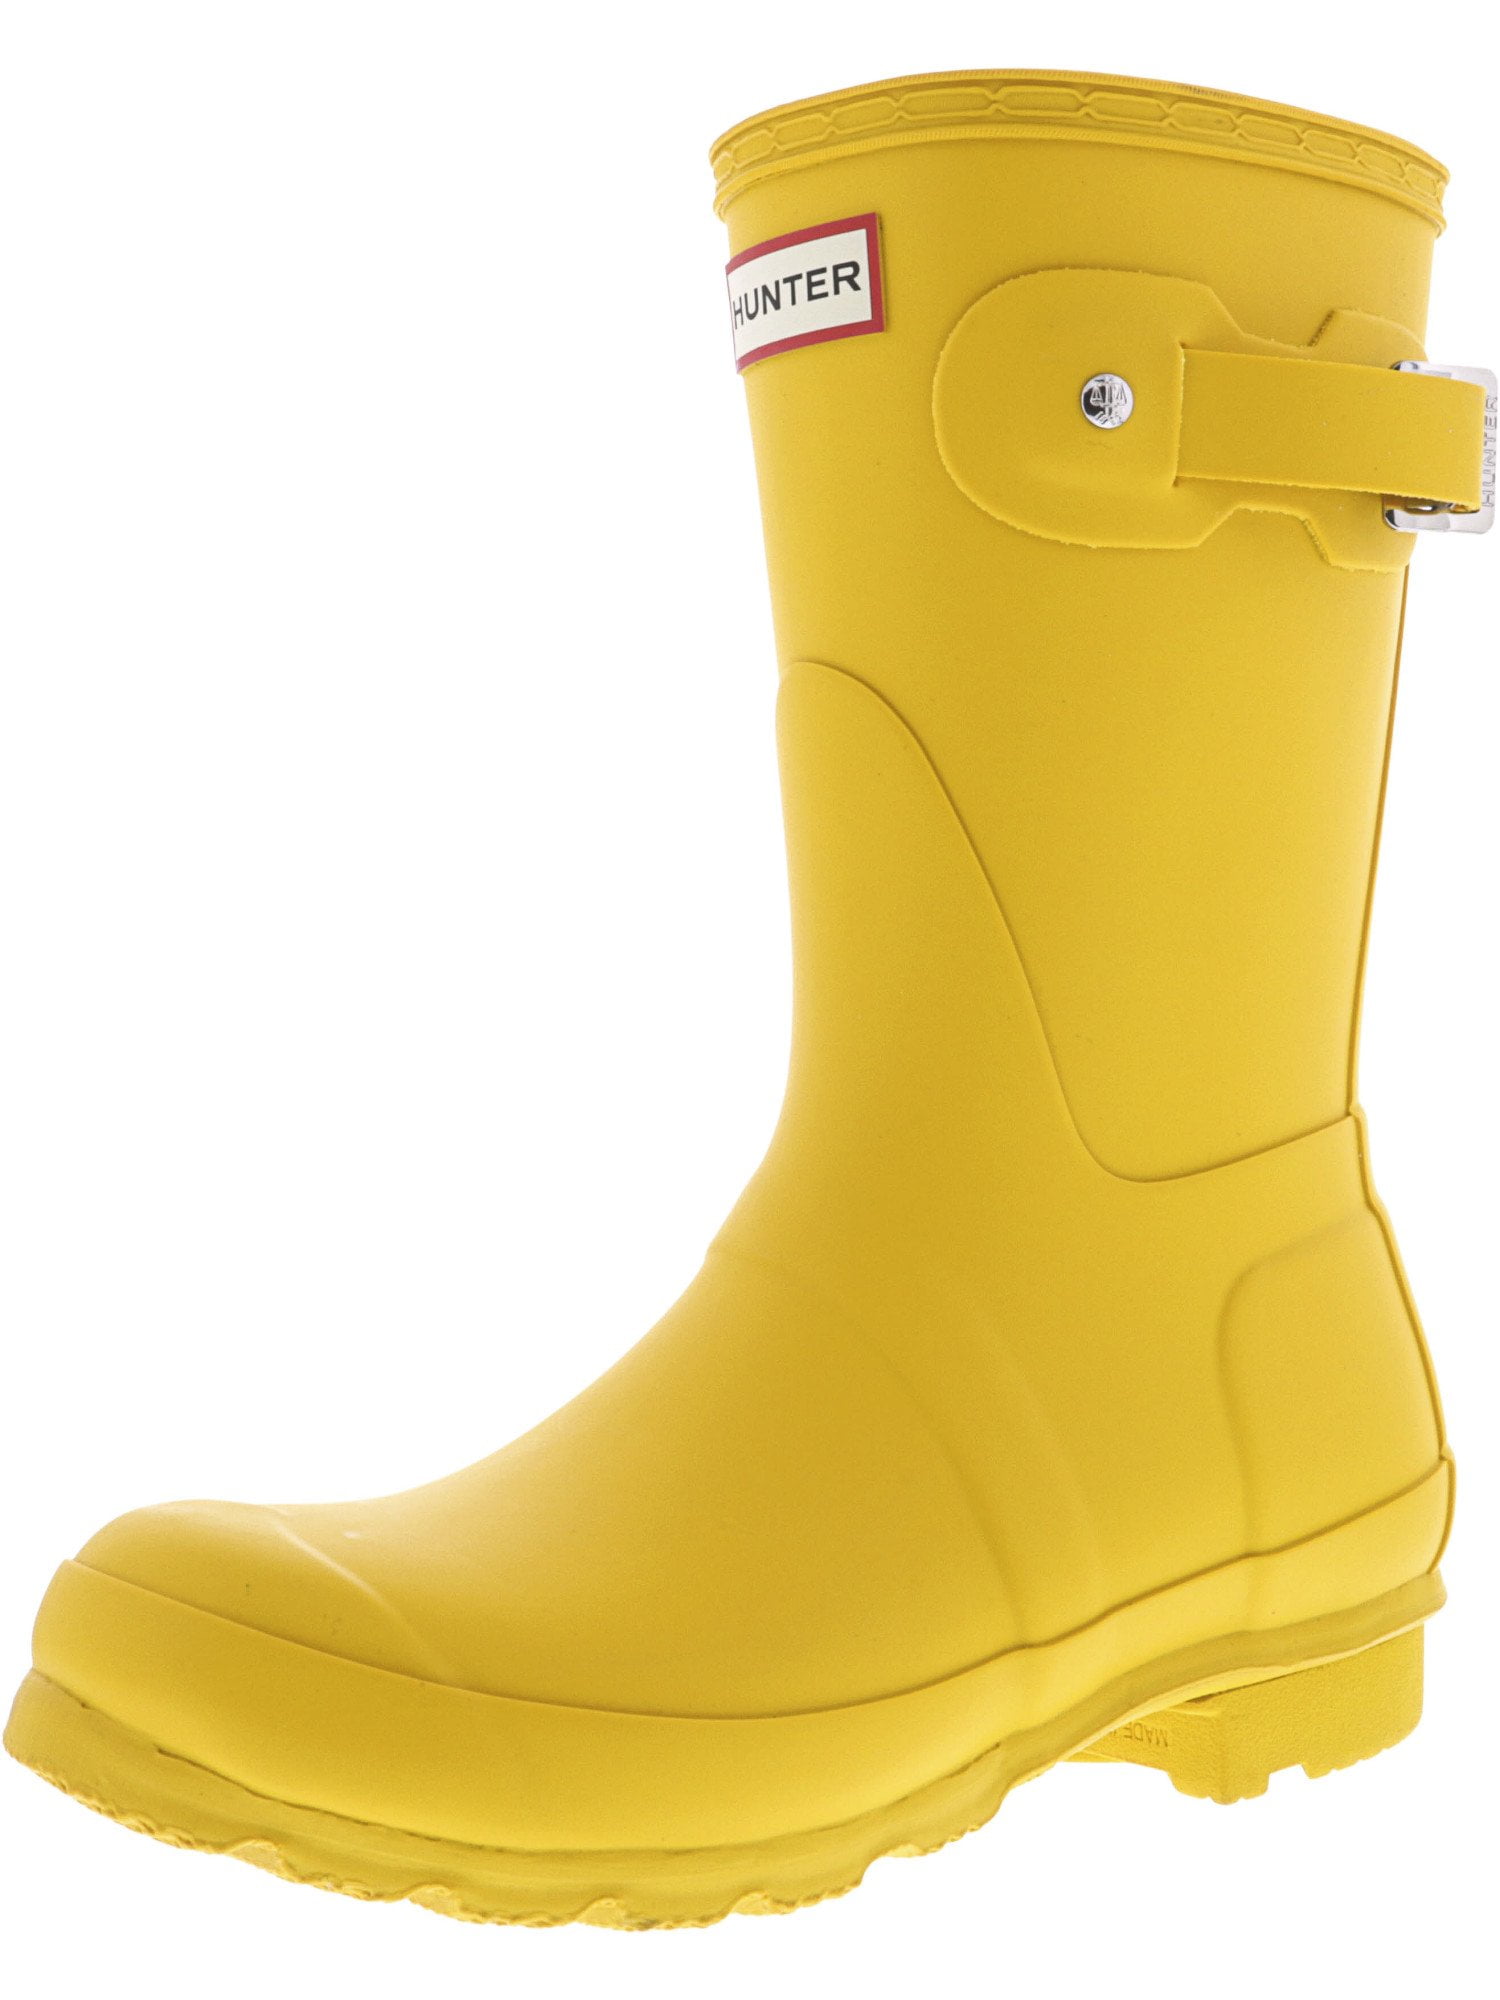 yellow hunter boots sale